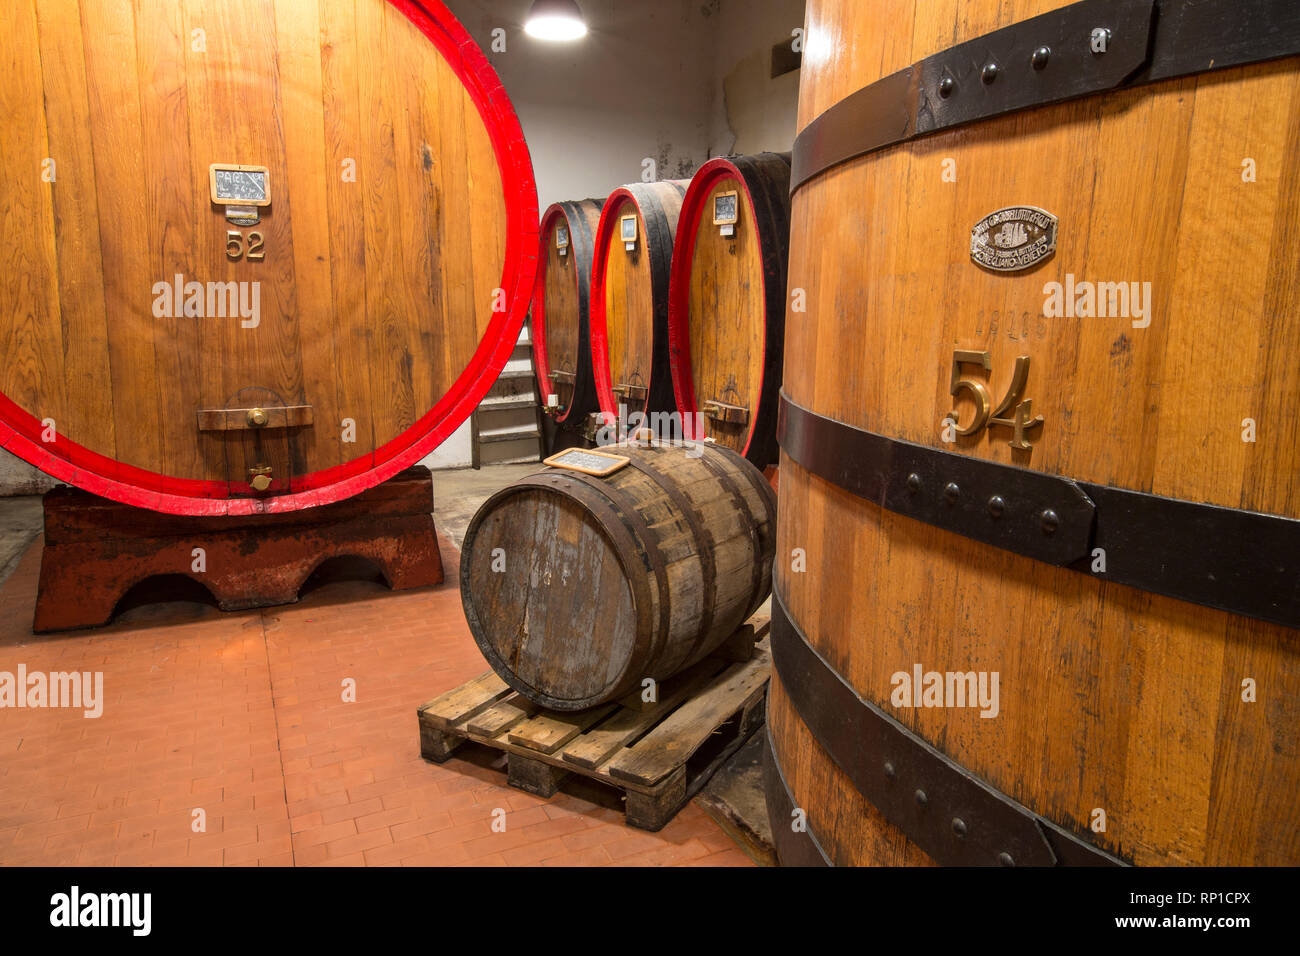 Oak barrels for aging of alpine liquor Amaro Braulio, Bormio, Sondrio province, Valtellina, Lombardy, Italy Stock Photo